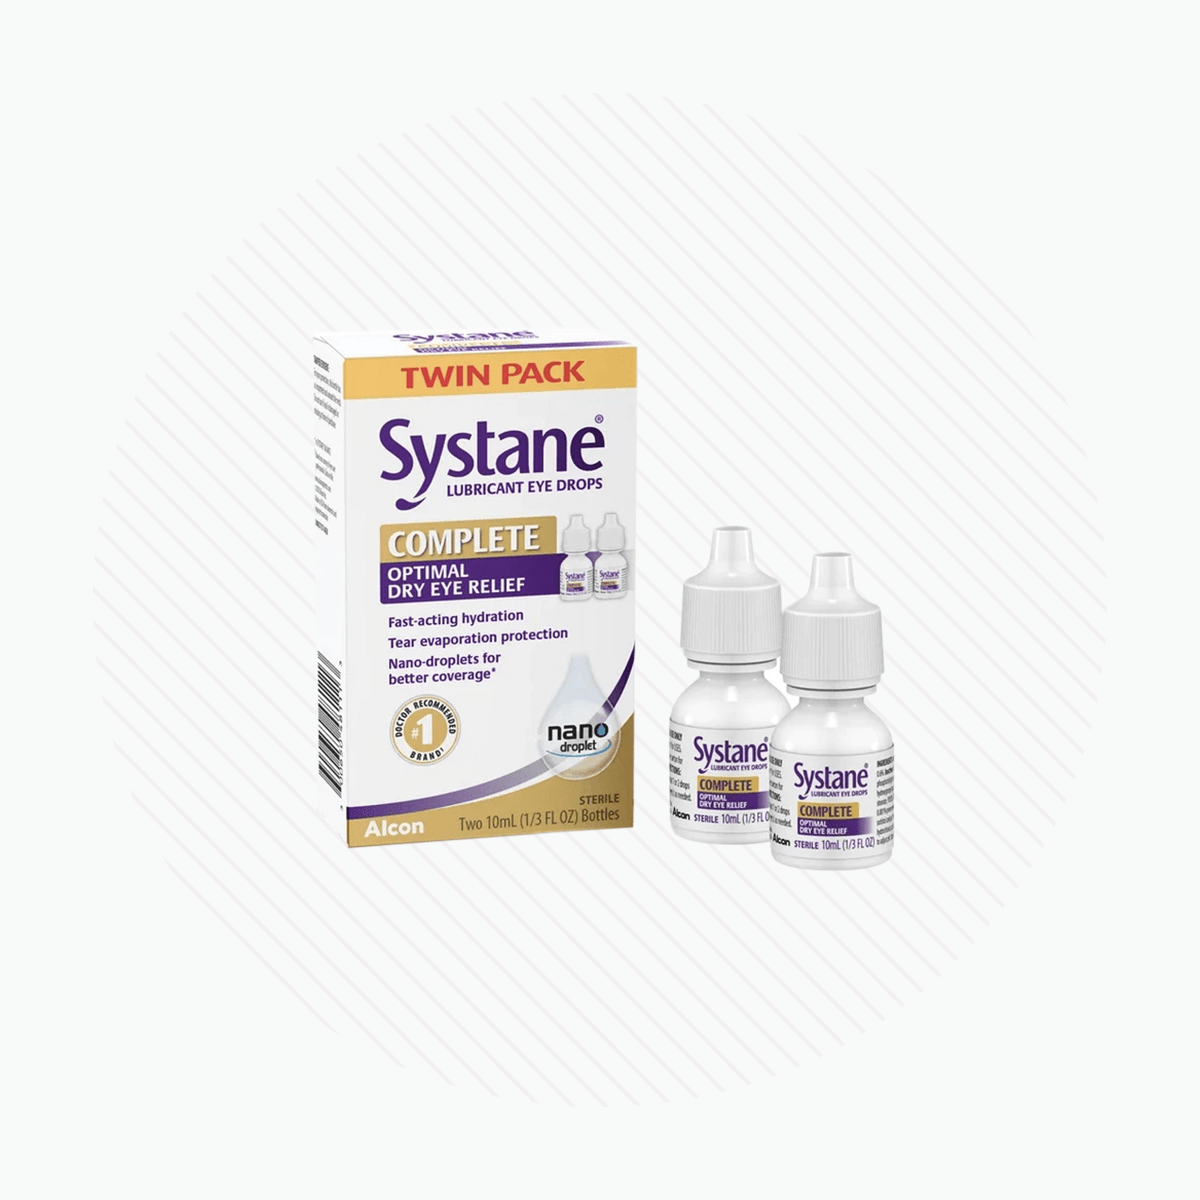 Systane Complete, Lubricant Eye Drops for Dry Eye Symptoms, Twin Pack (2 x 10ml Bottle) - Dryeye Rescue